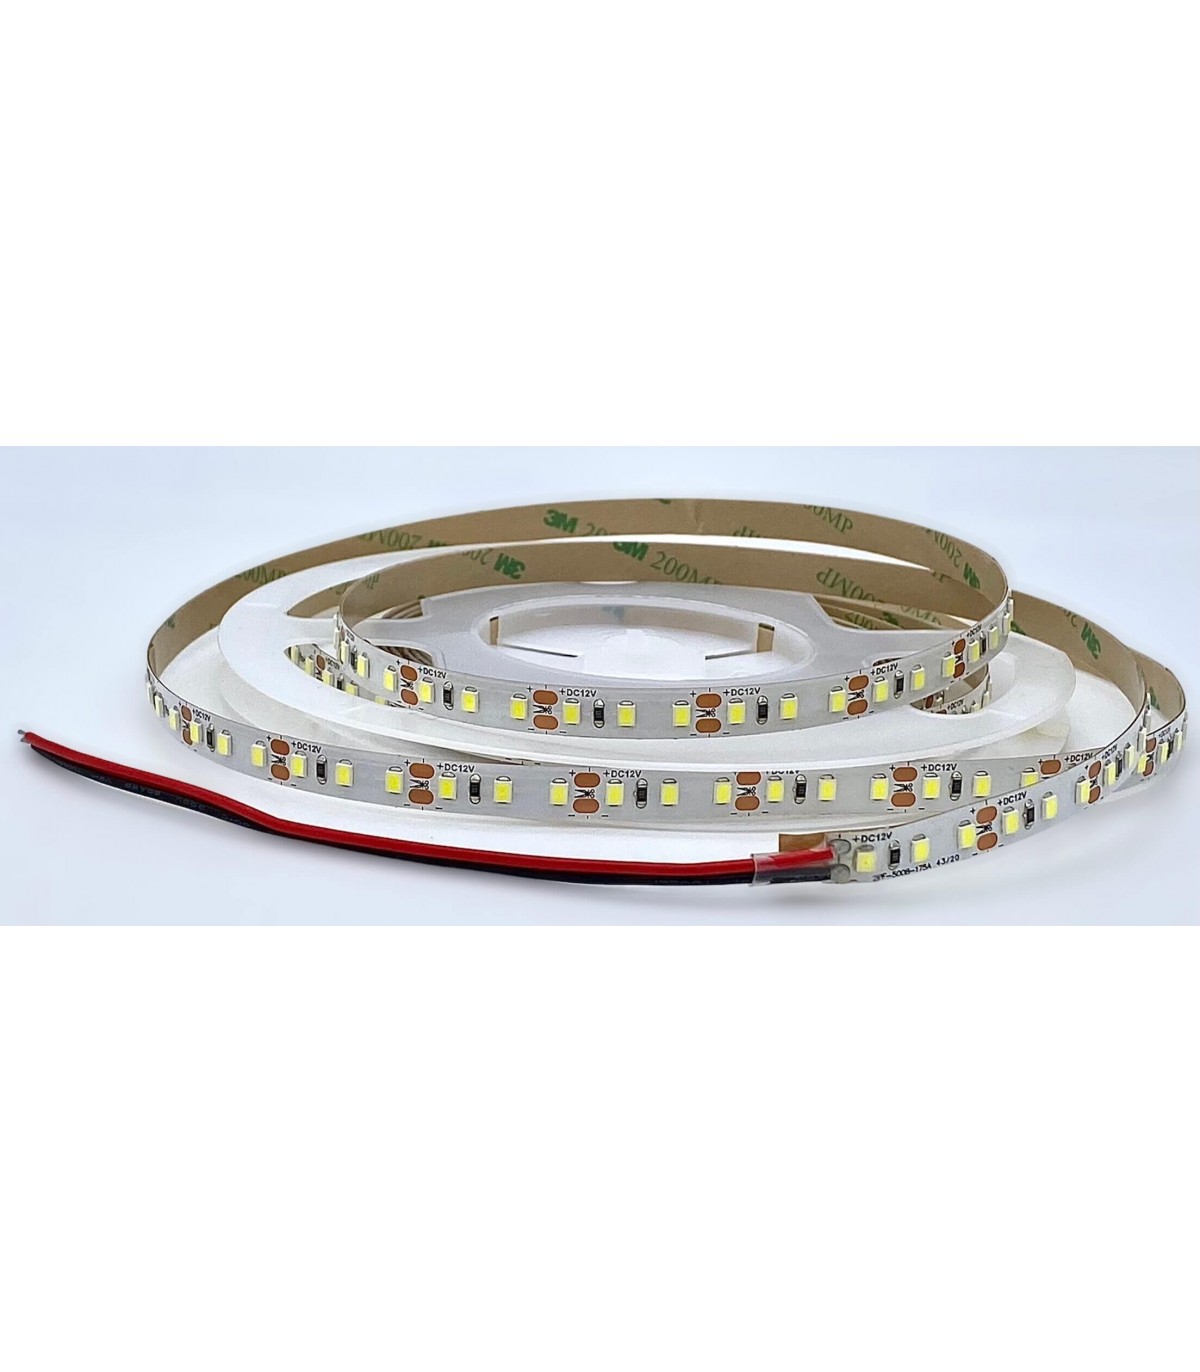 Bande LED RVB connectée 5 m, Réglettes et rubans LED